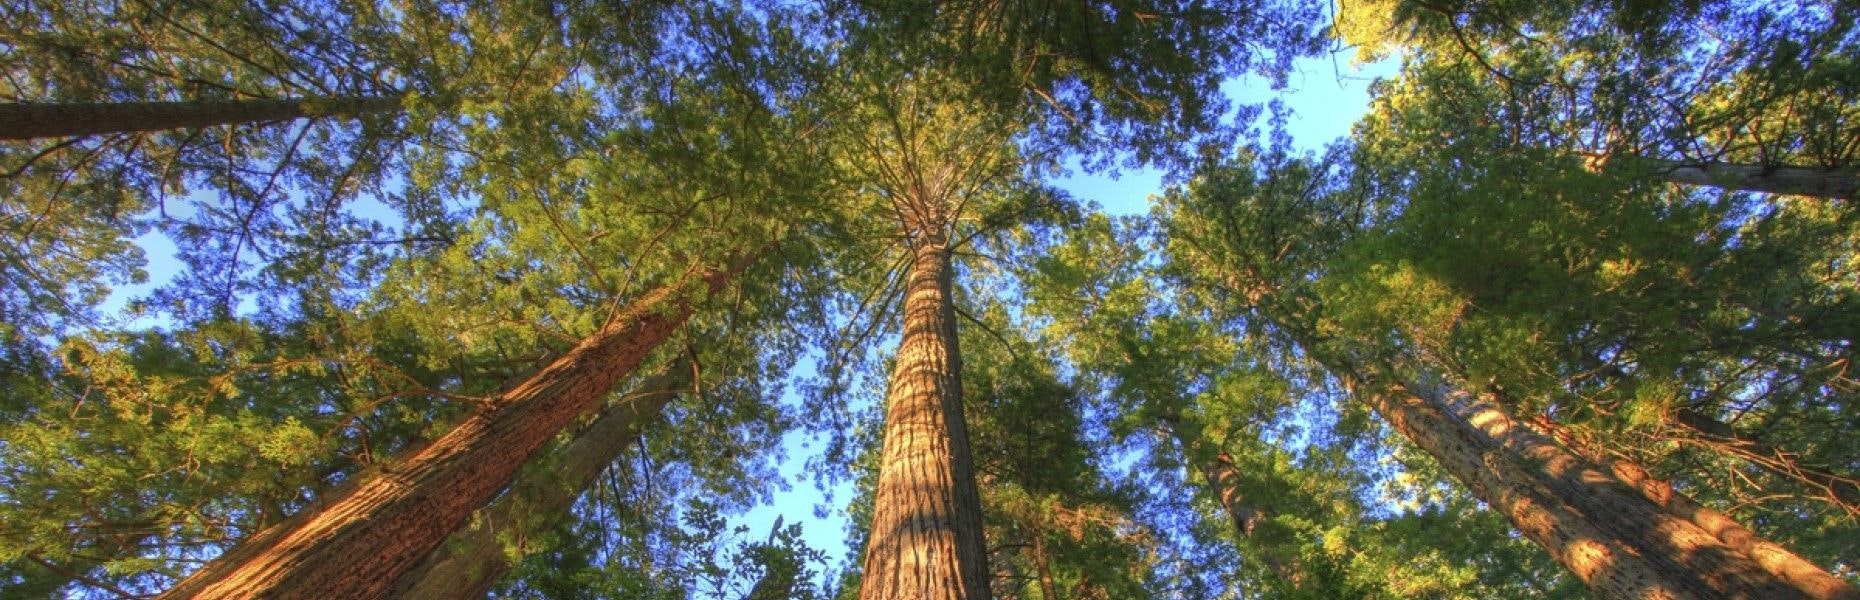 Redwoods Treewalk Rotorua